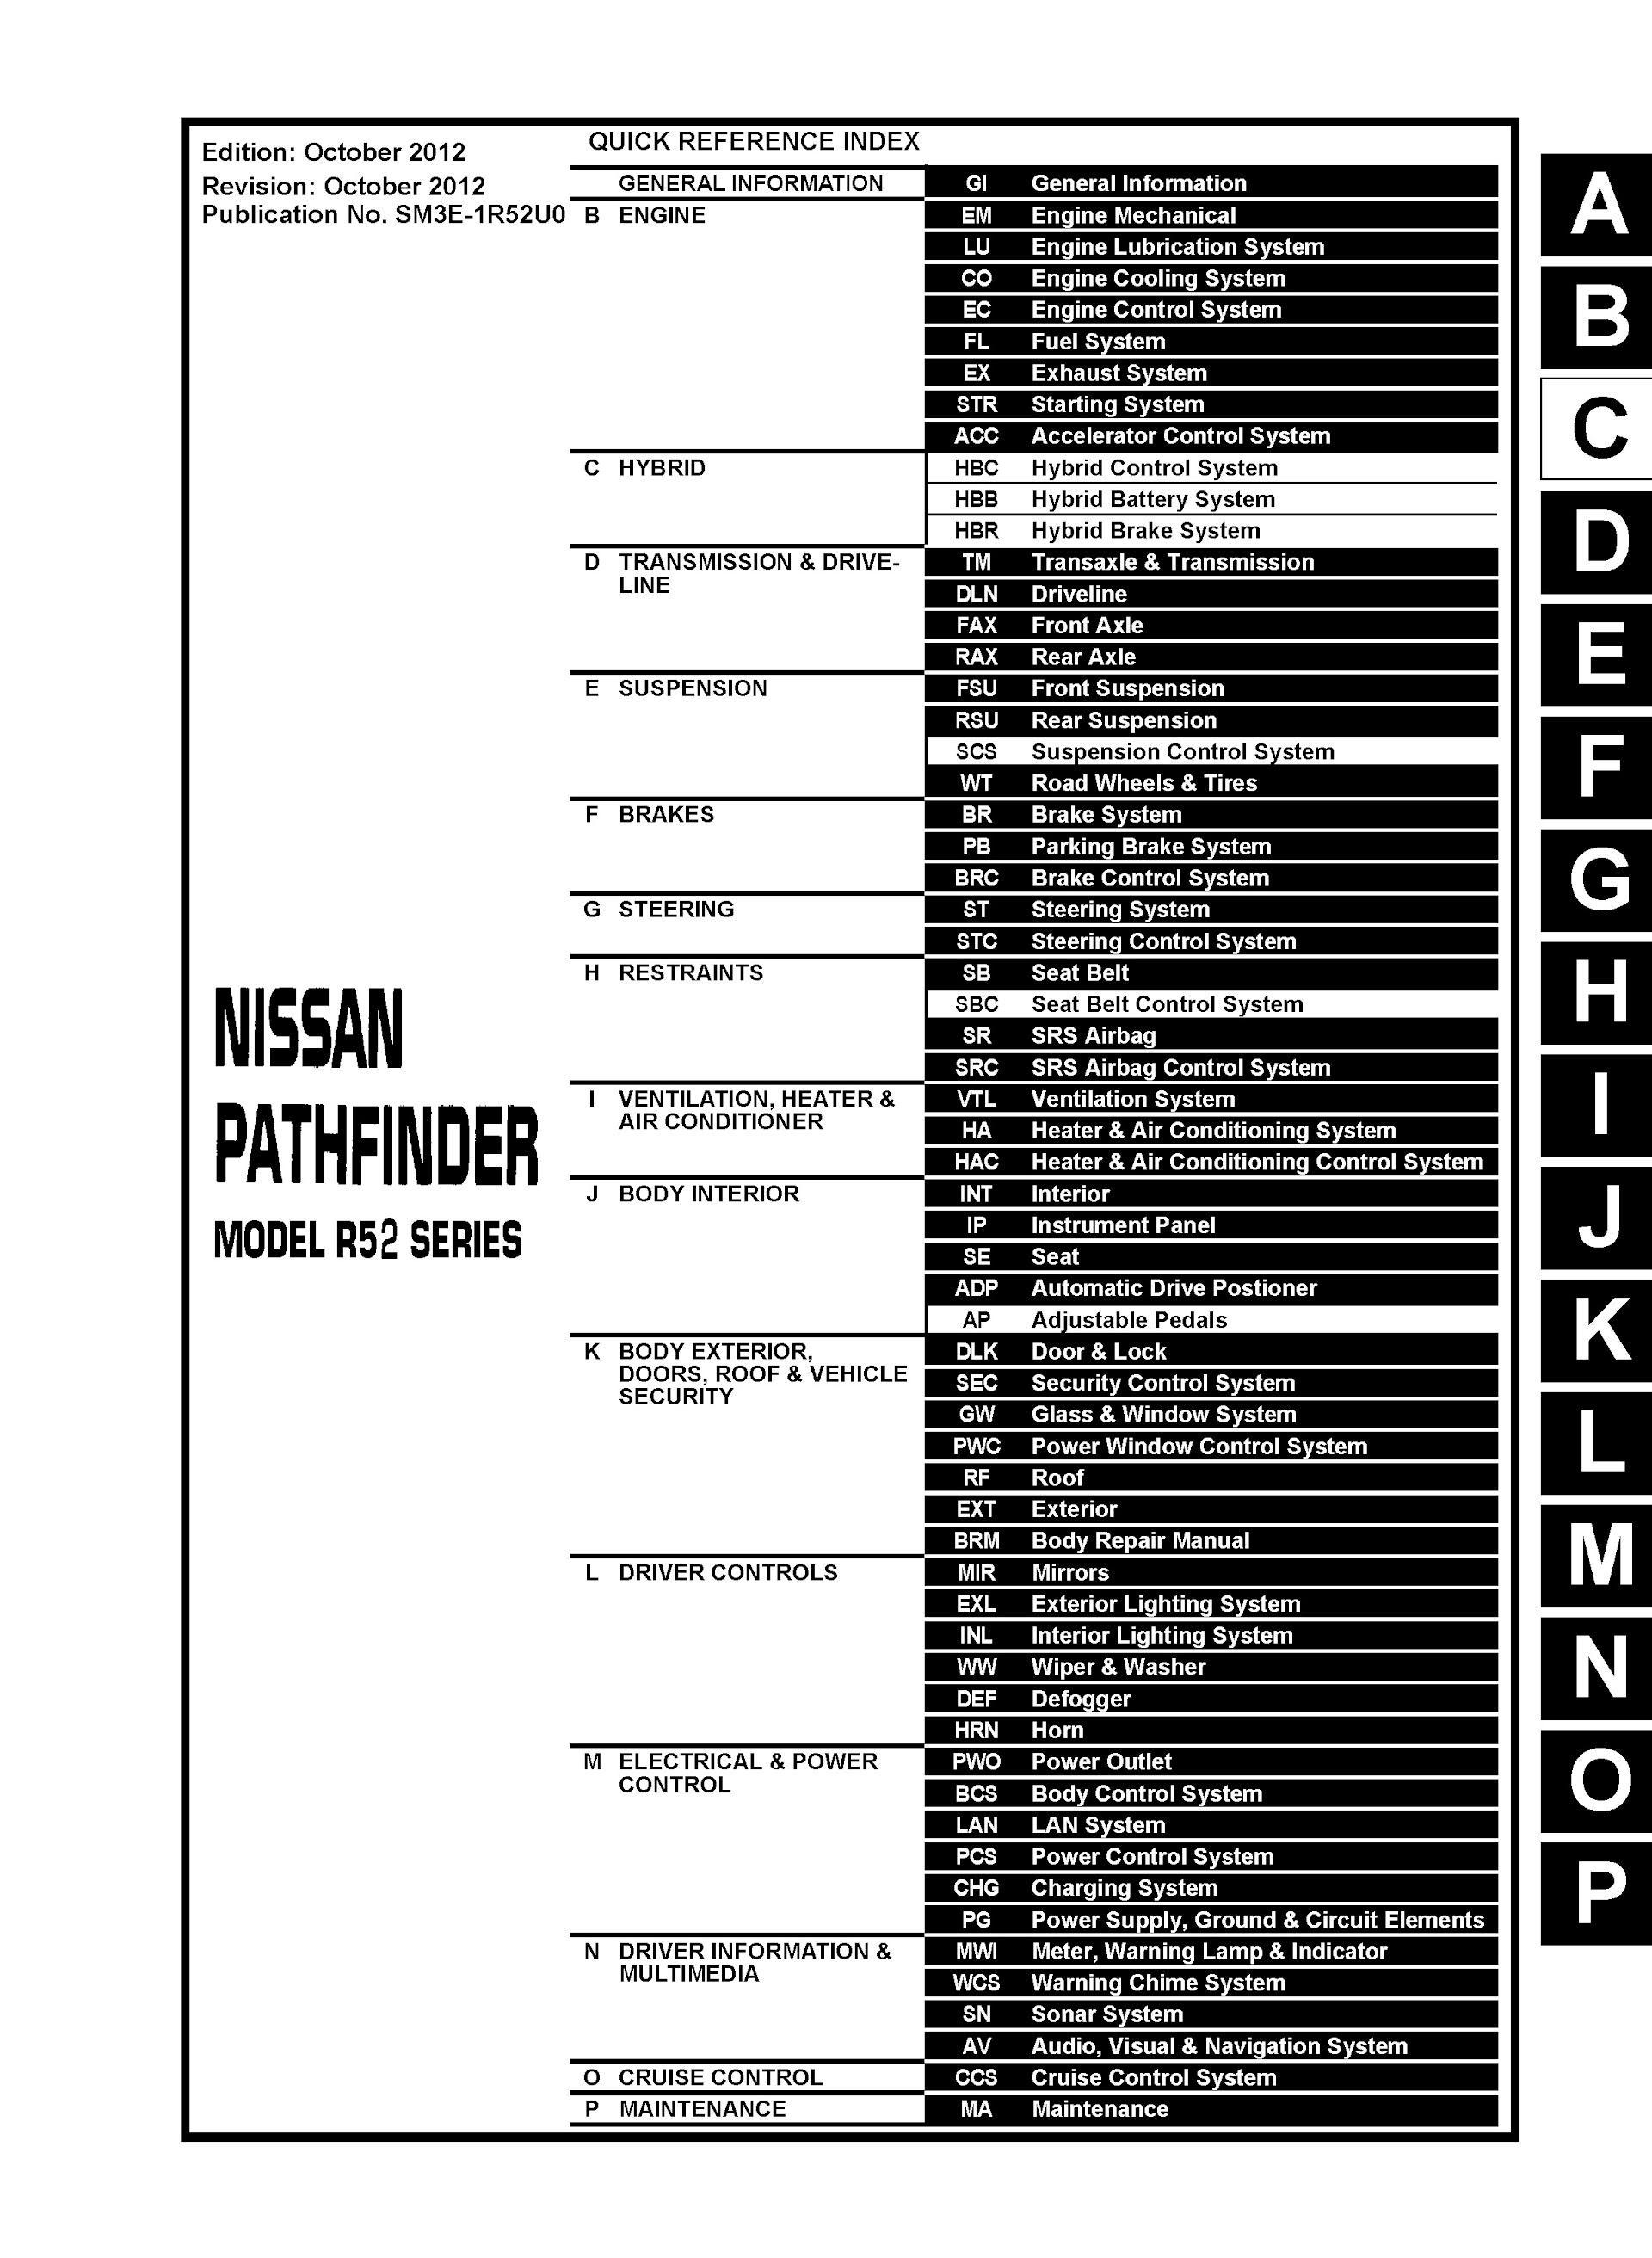 Table of Content 2013 Nissan Pathfinder Repair Manual